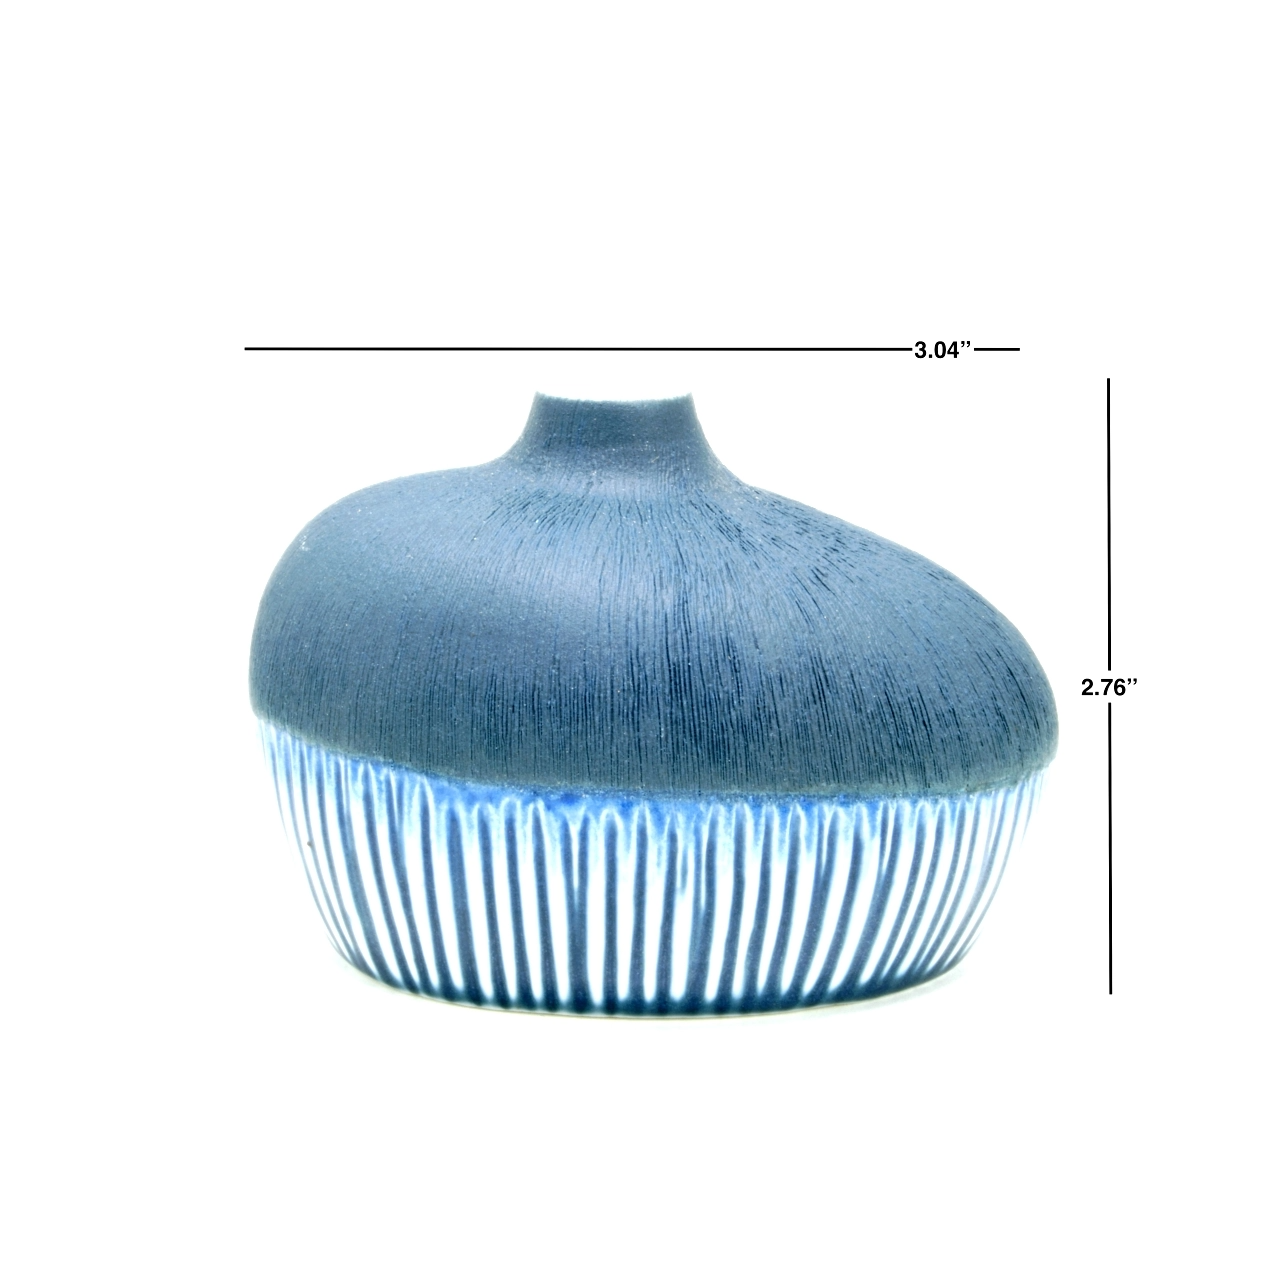 Gugu Pim Porcelain Bud Vase - Blue - 3.04"W x 2.76"H - Mellow Monkey